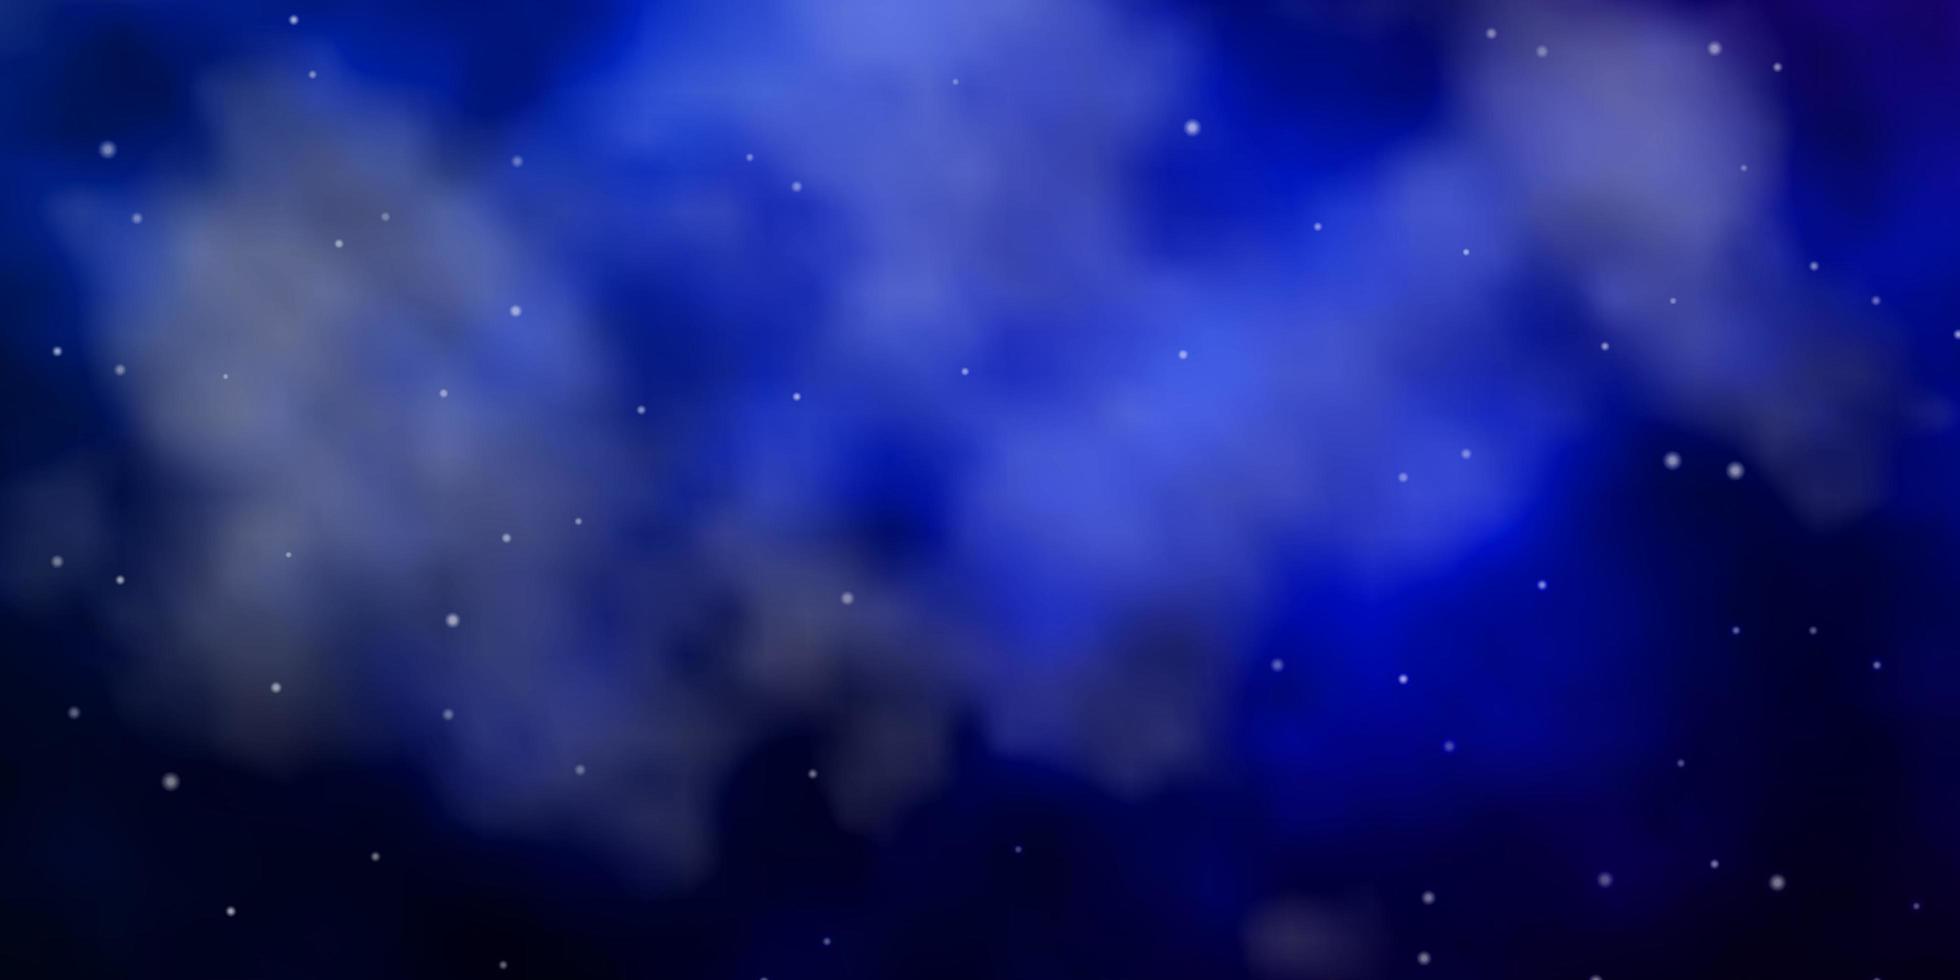 Fondo de vector azul oscuro con estrellas de colores. ilustración decorativa con estrellas en plantilla abstracta. tema para teléfonos celulares.